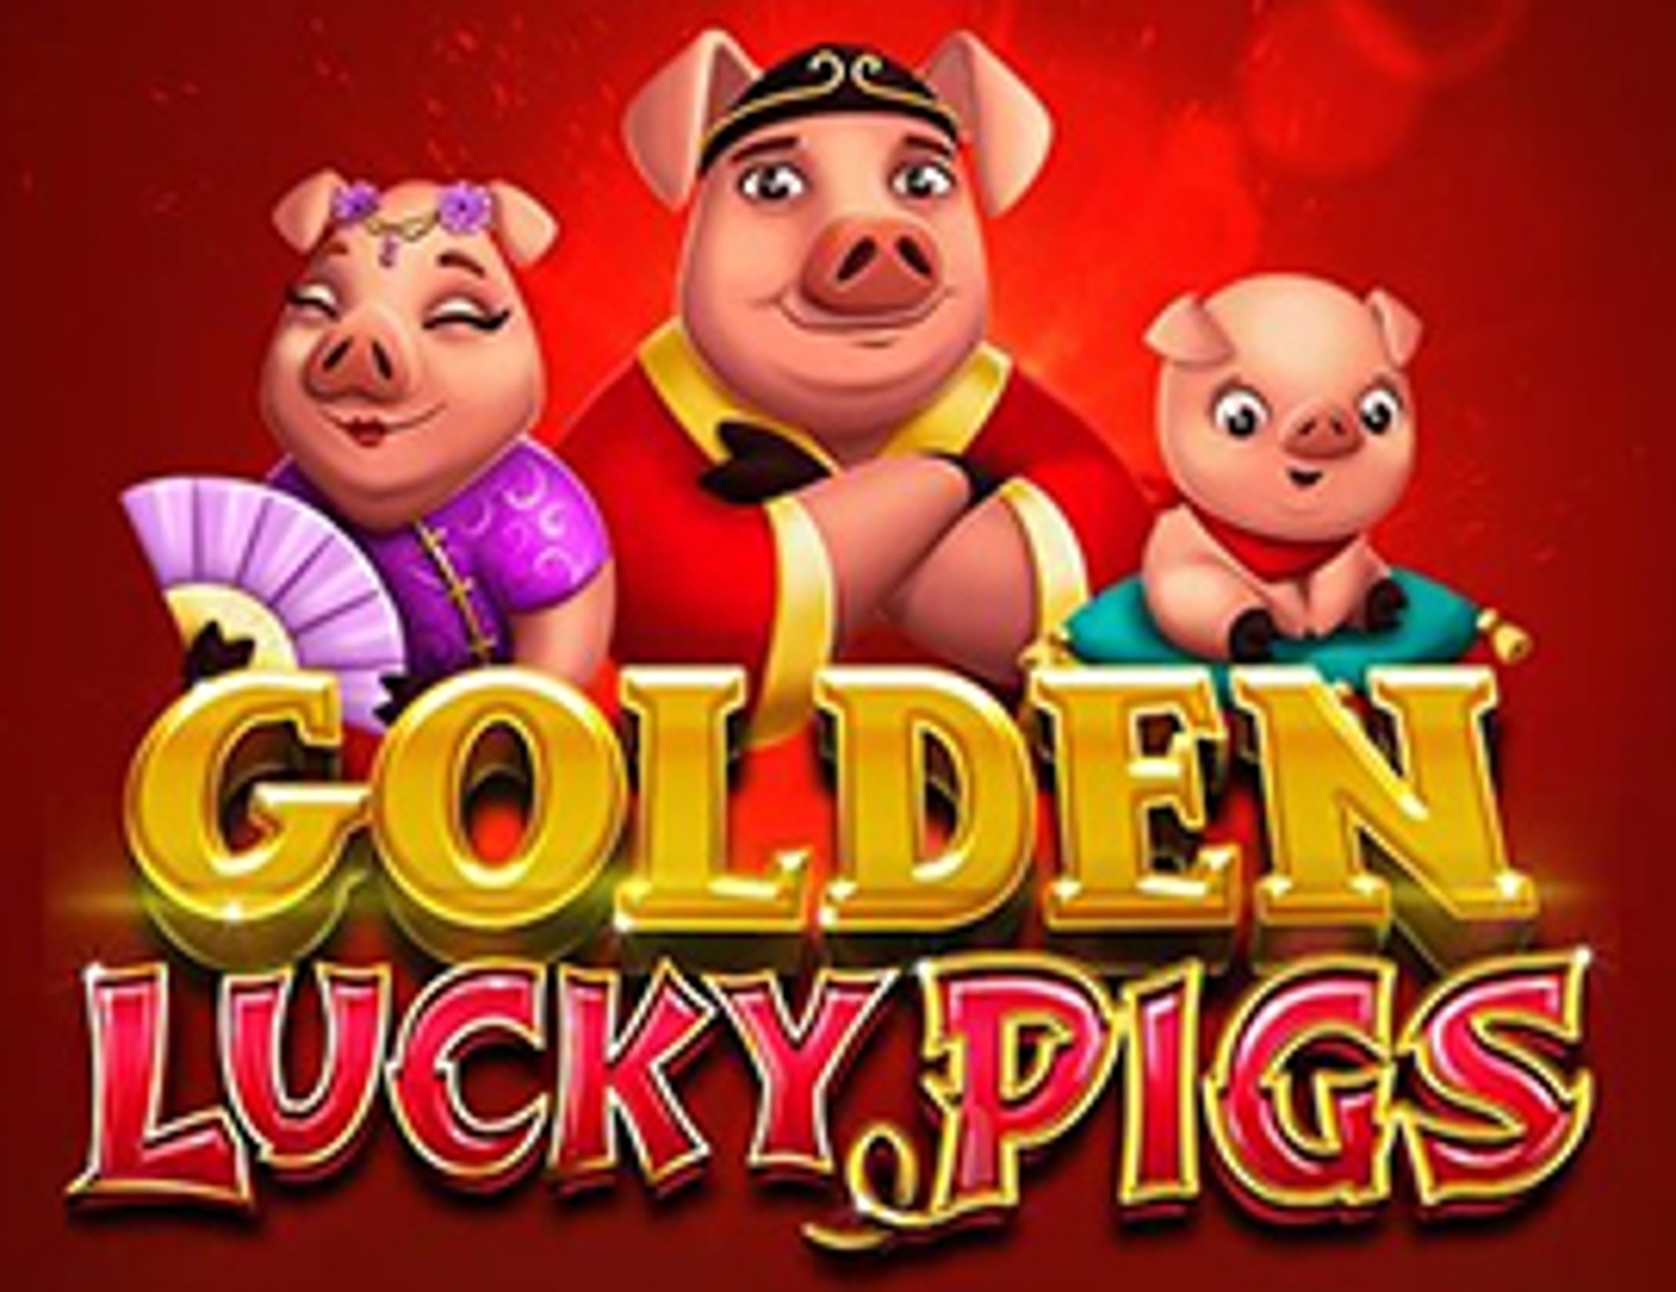 Golden Lucky Pigs demo